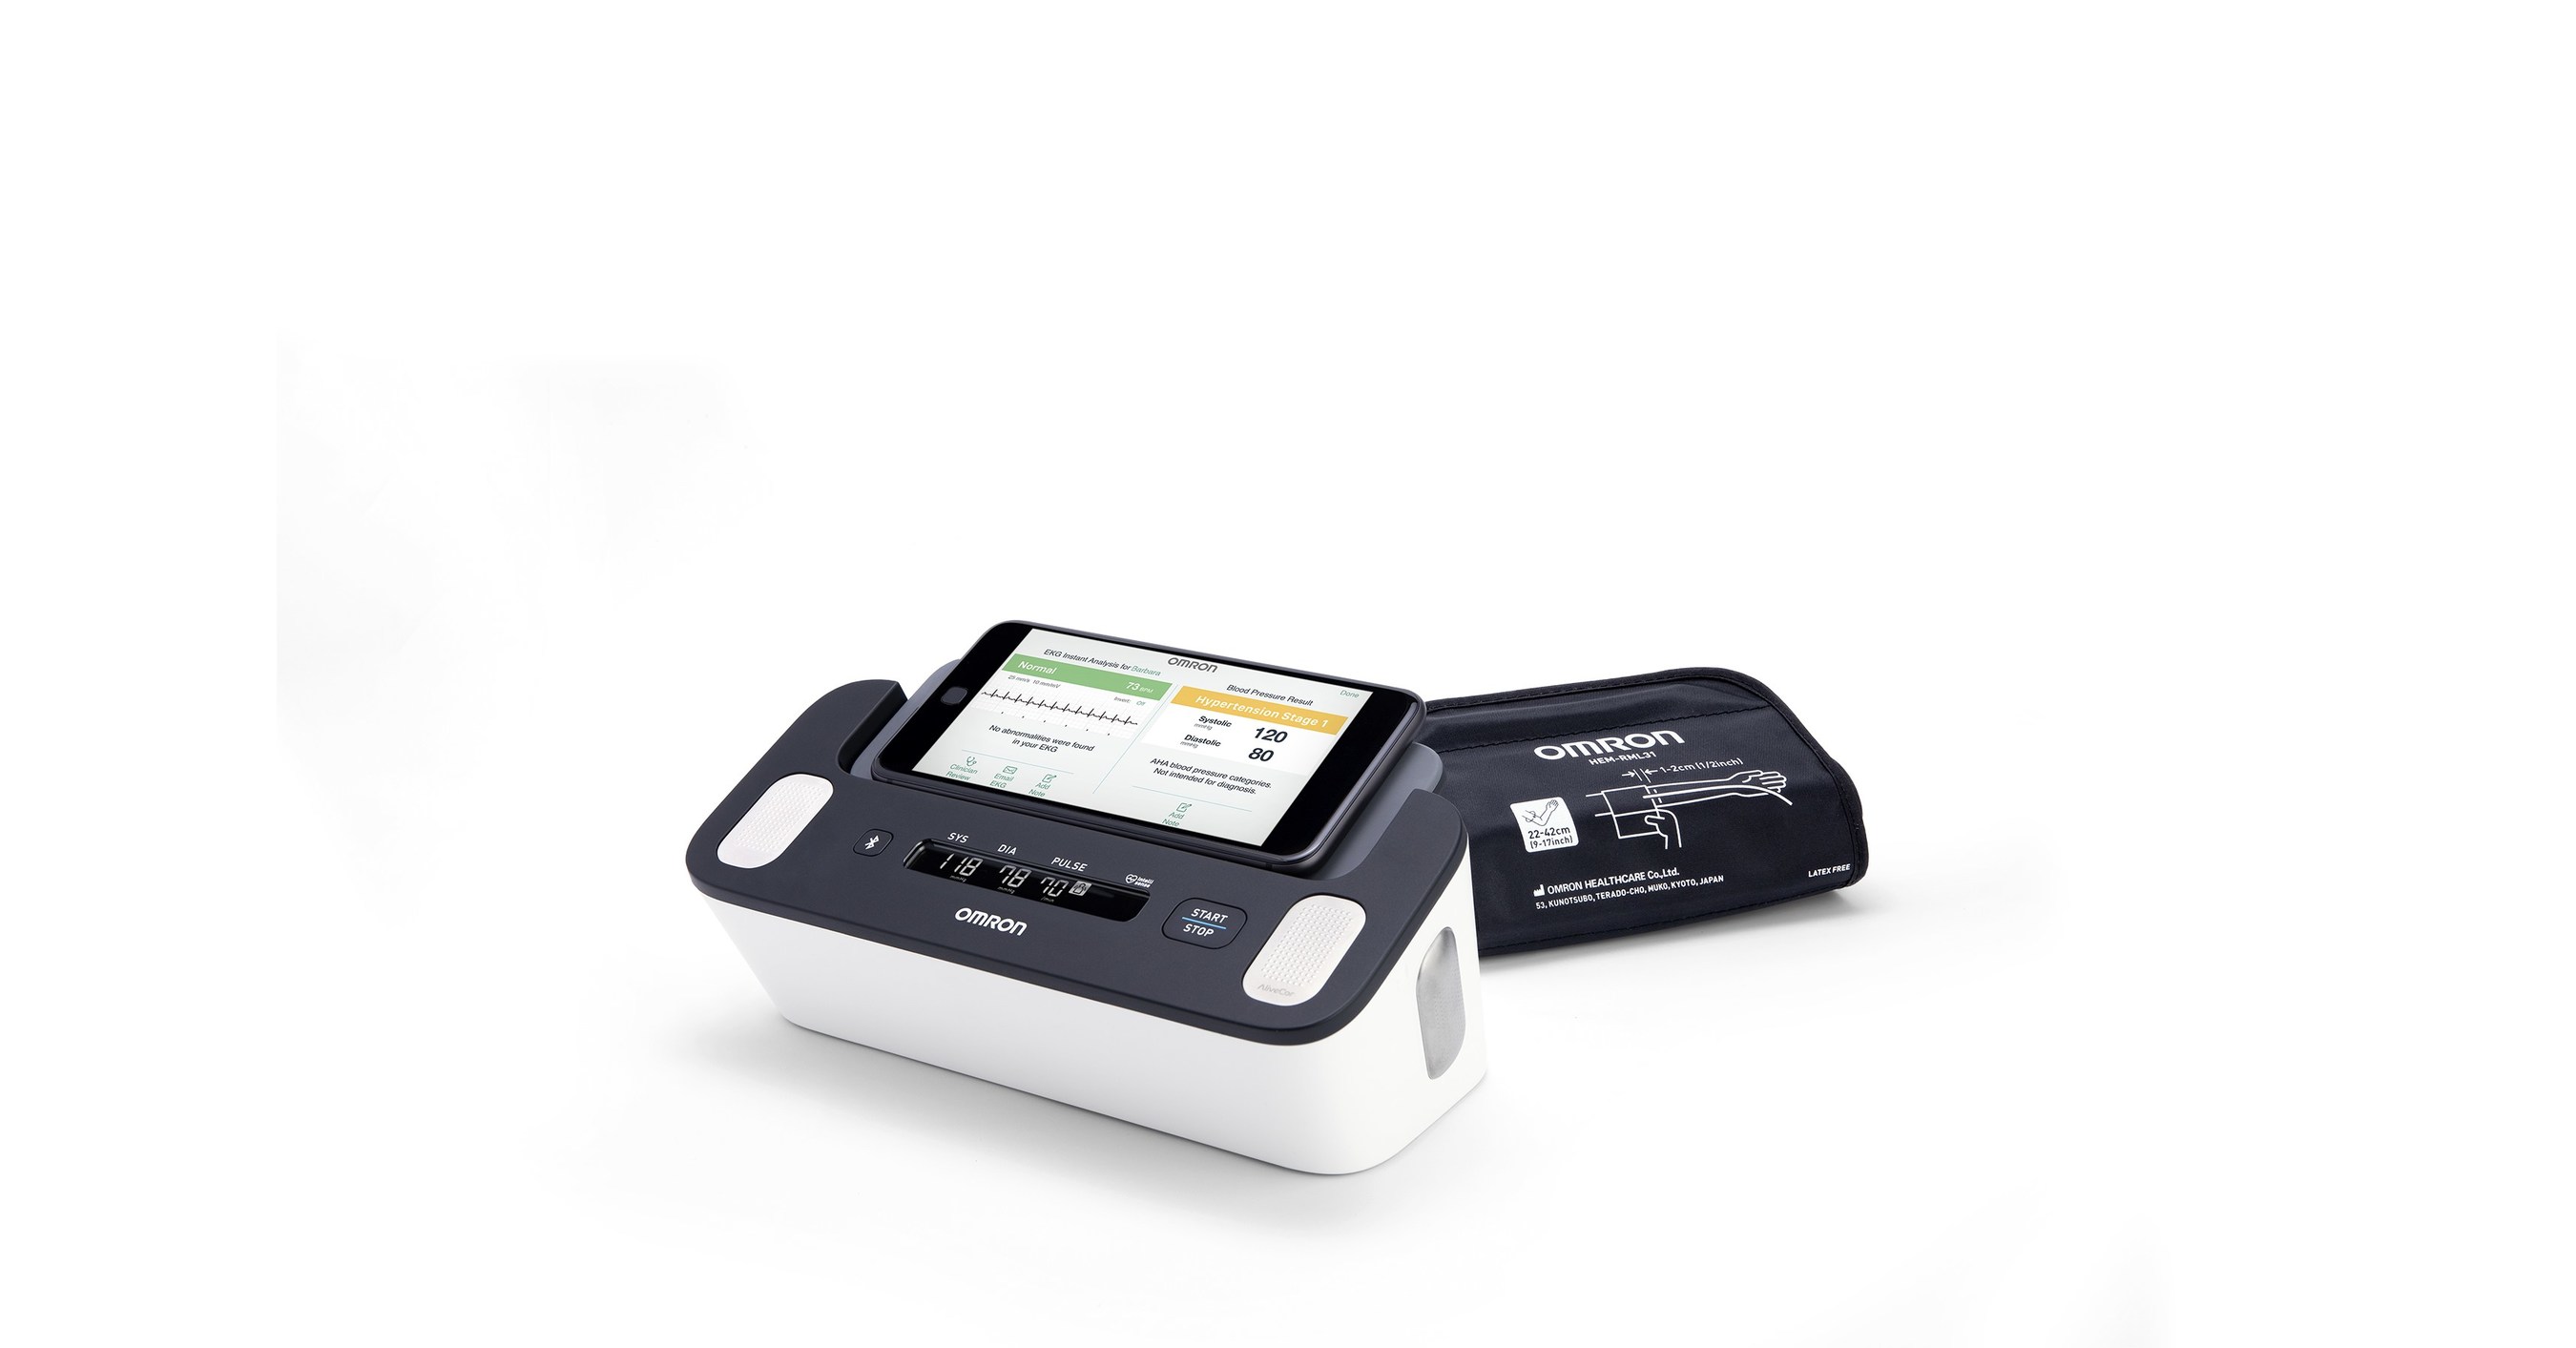 Omron announces new blood pressure monitors, app, AliveCor partnership